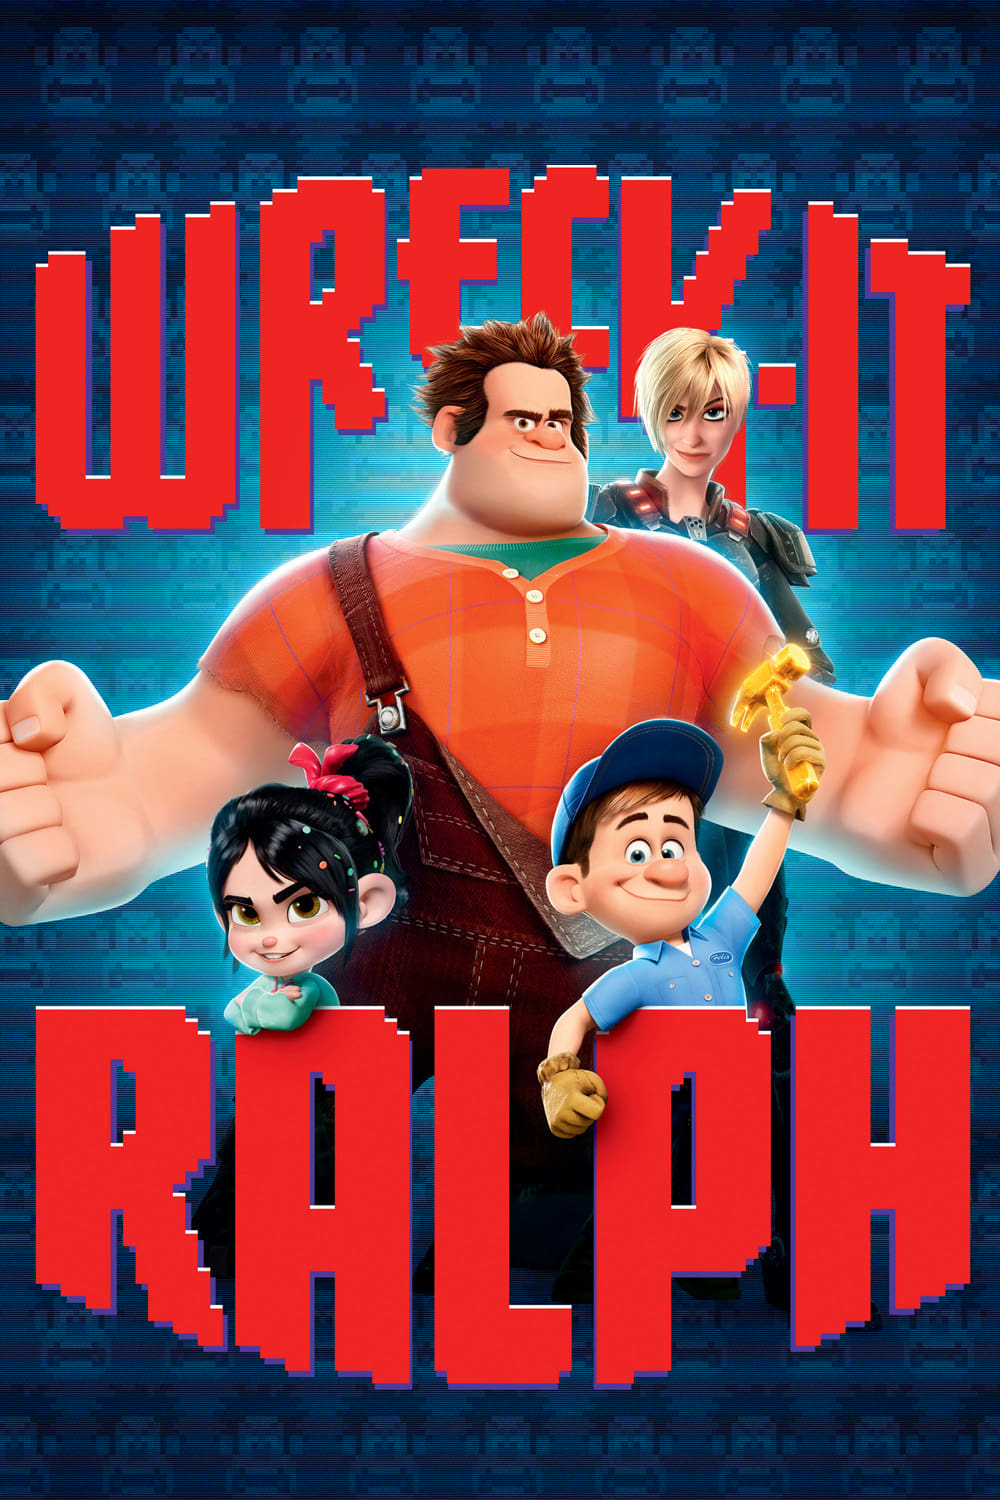 Wreck-It Ralph movie poster